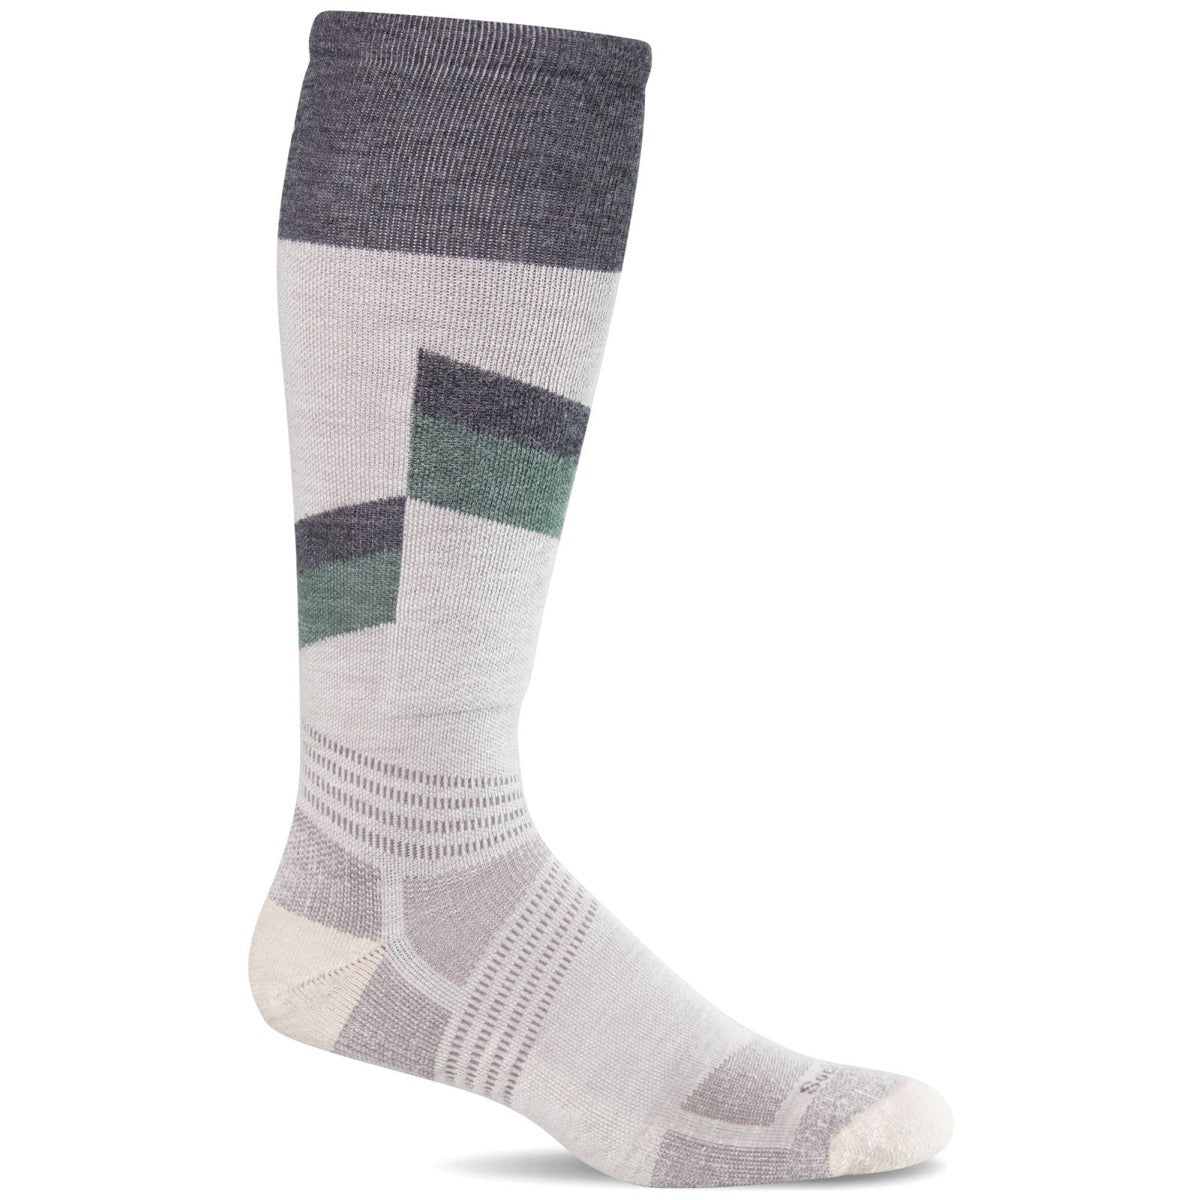 Steep Medium Moderate Graduated Compression Socks